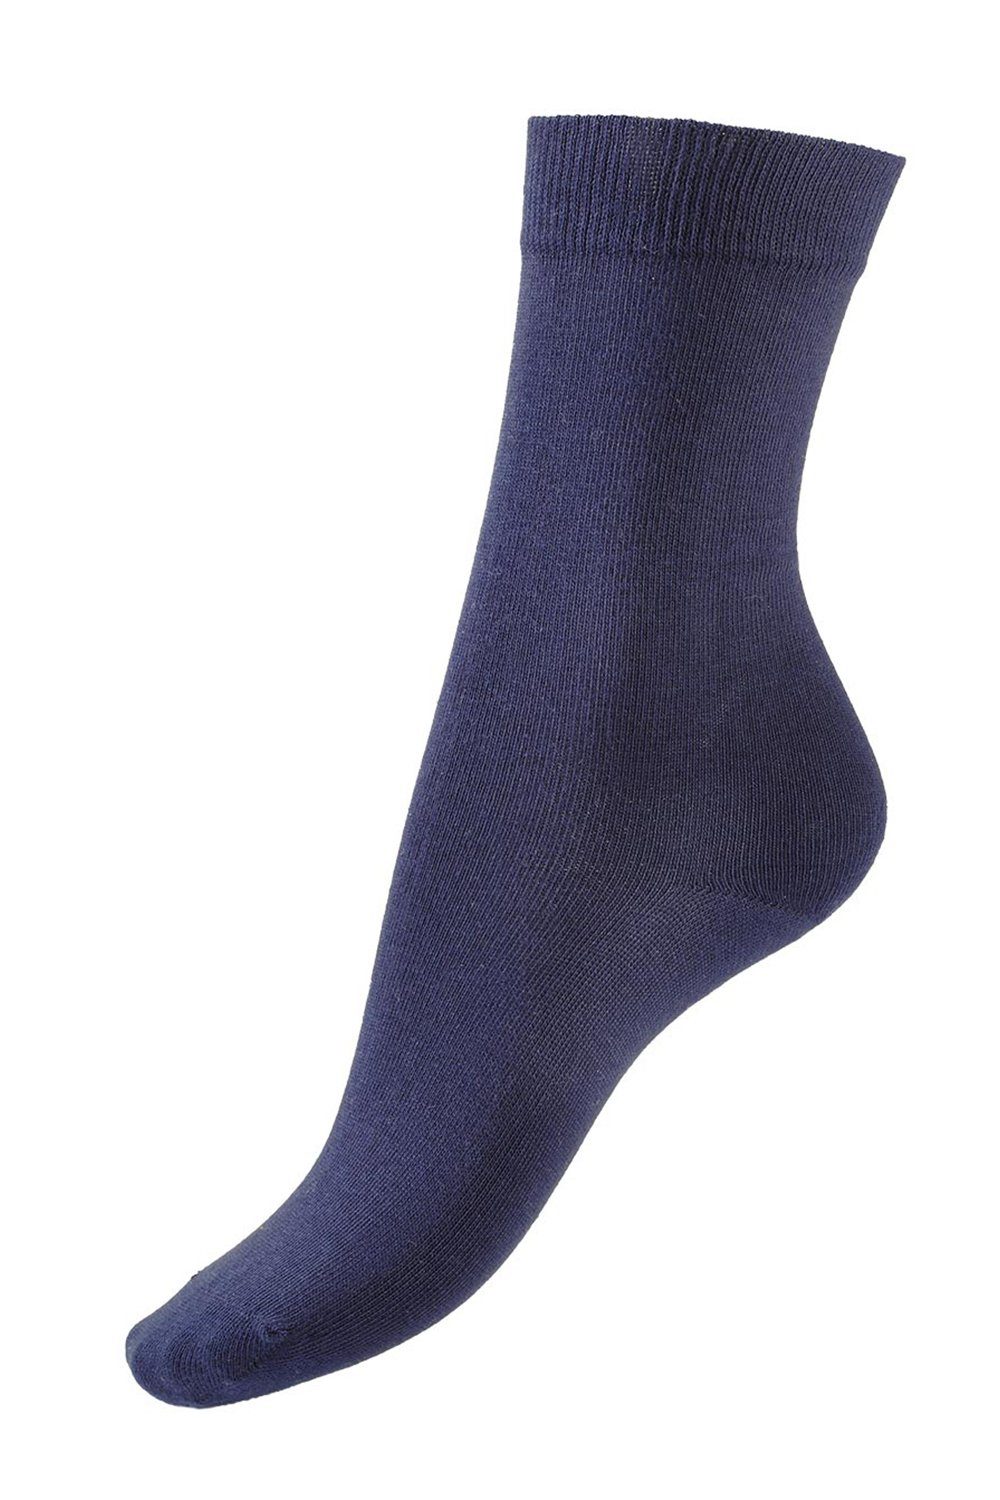 COMPRESSANA Socken Gesundheits-Socken GoWell (2er-Pack) Soft, 3010 2er-Pack MED nachtblau